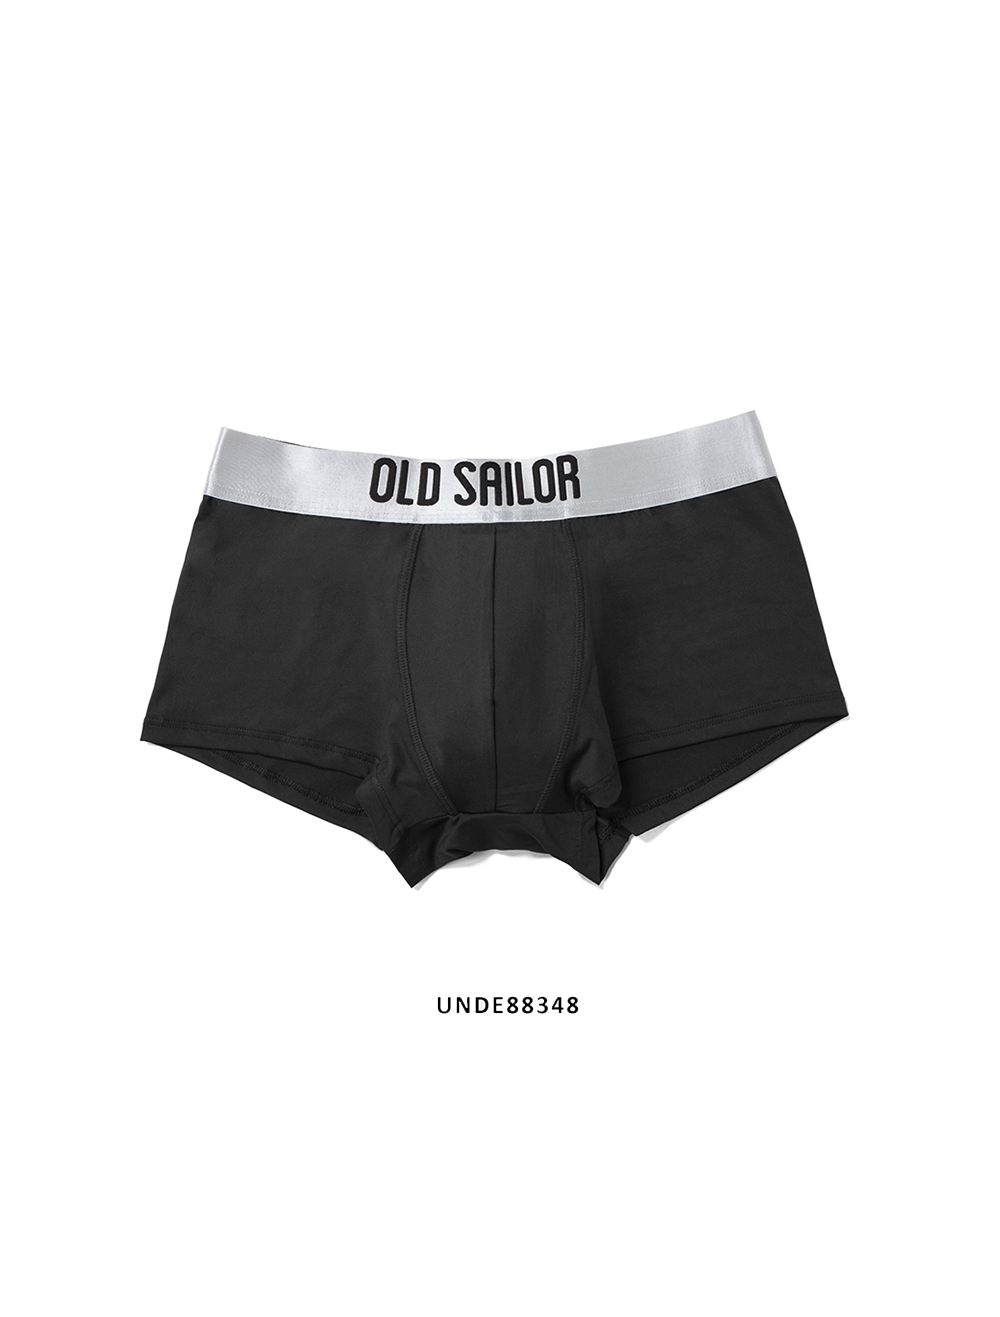 Quần Boxer Old Sailor - O.S.L BOXER - BLACK UNDE883481 -  đen - big size upto 5XL